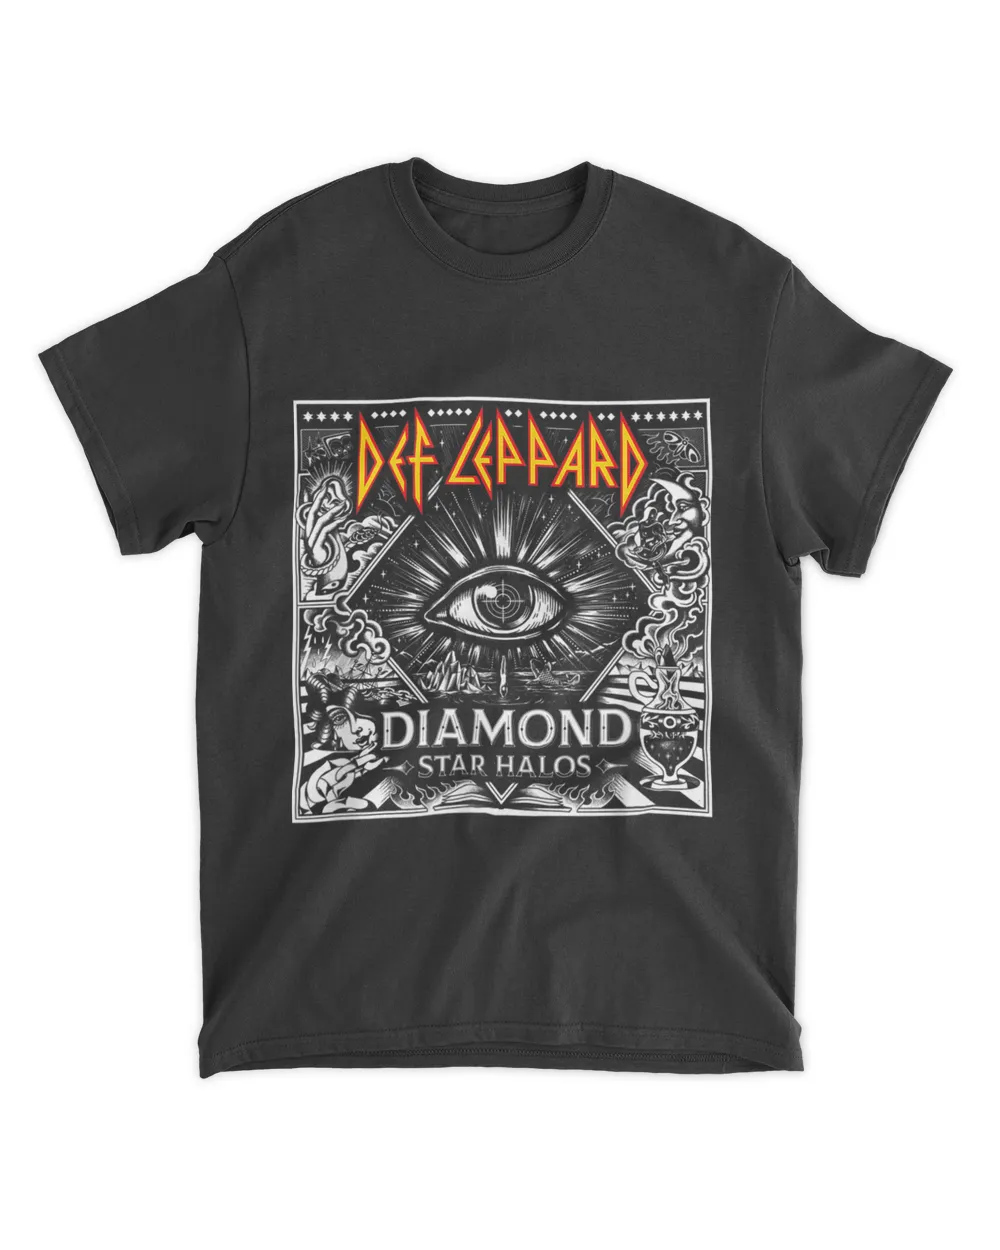 Def Leppard - Diamond Star Halos T-Shirt hoodie shirt